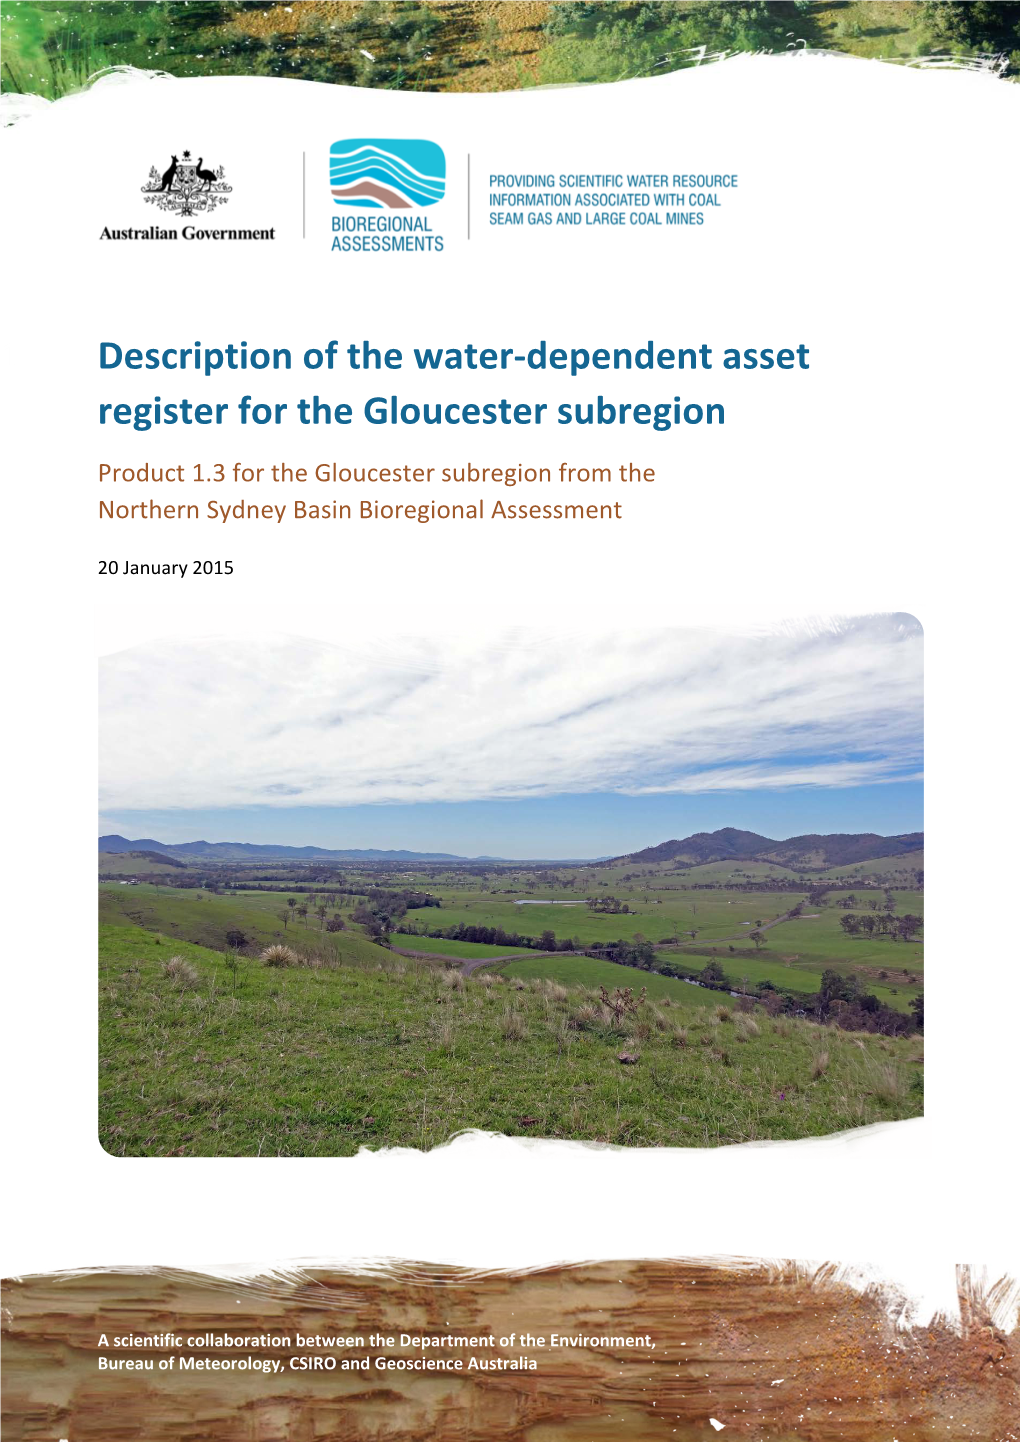 Description of the Water-Dependent Asset Register for the Gloucester